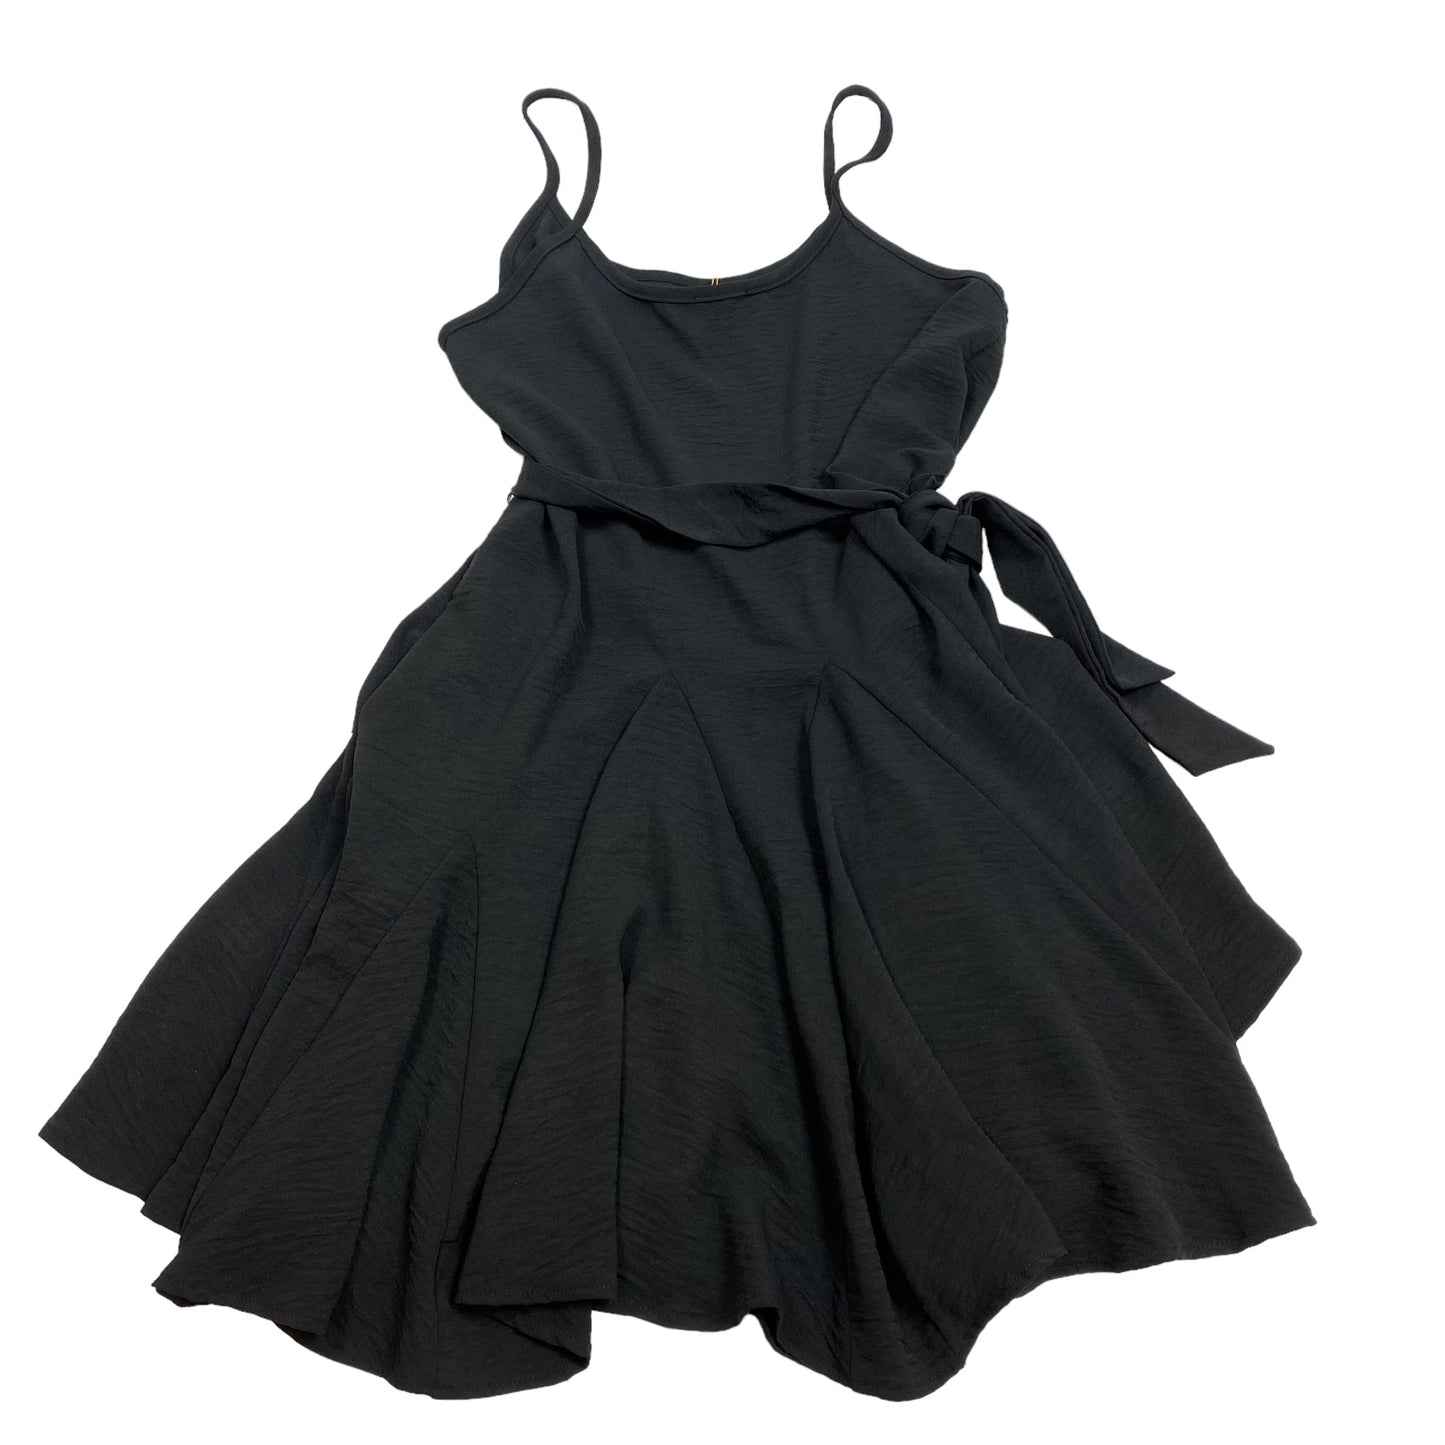 Black Dress Casual Short Vision, Size M